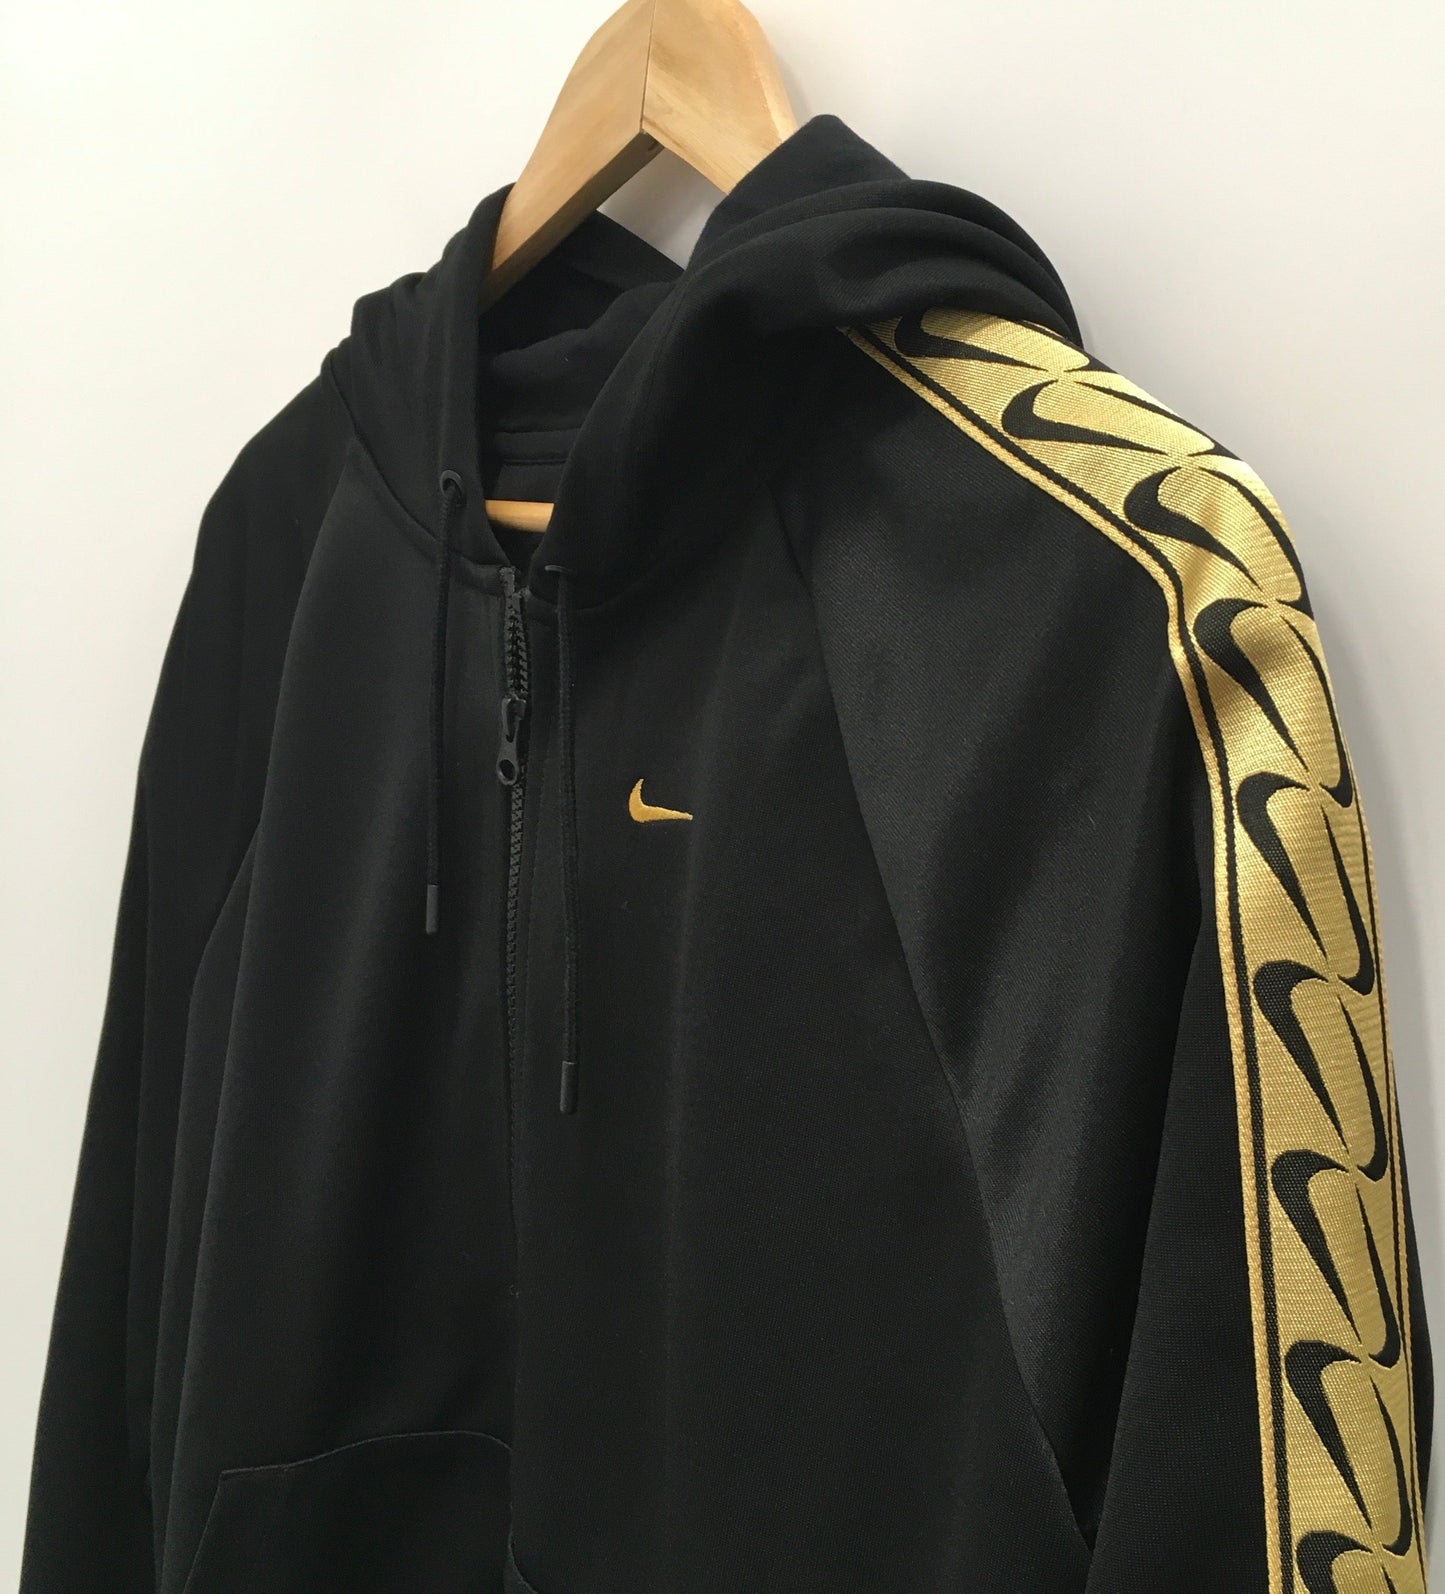 Athletic Jacket By Nike  Size: 1x